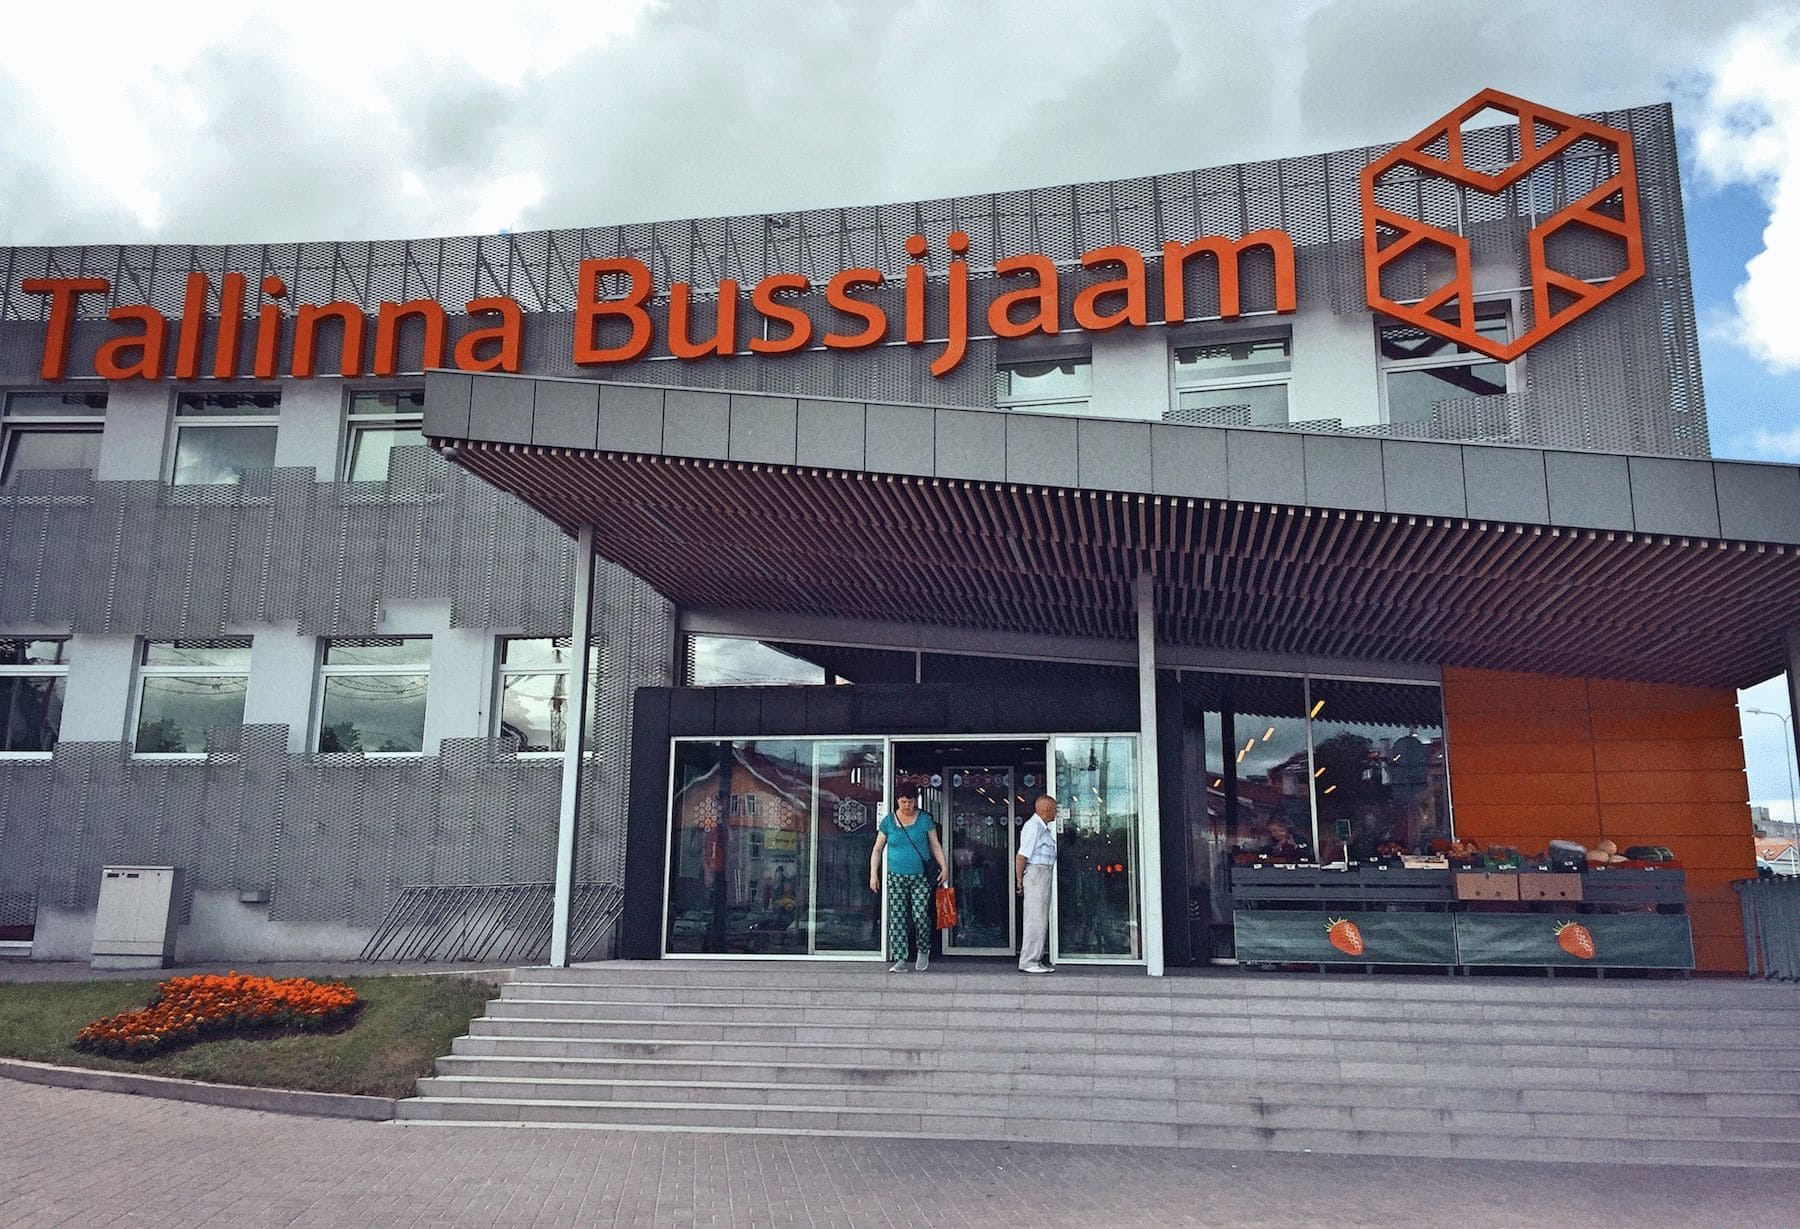 Tallinn's bus station